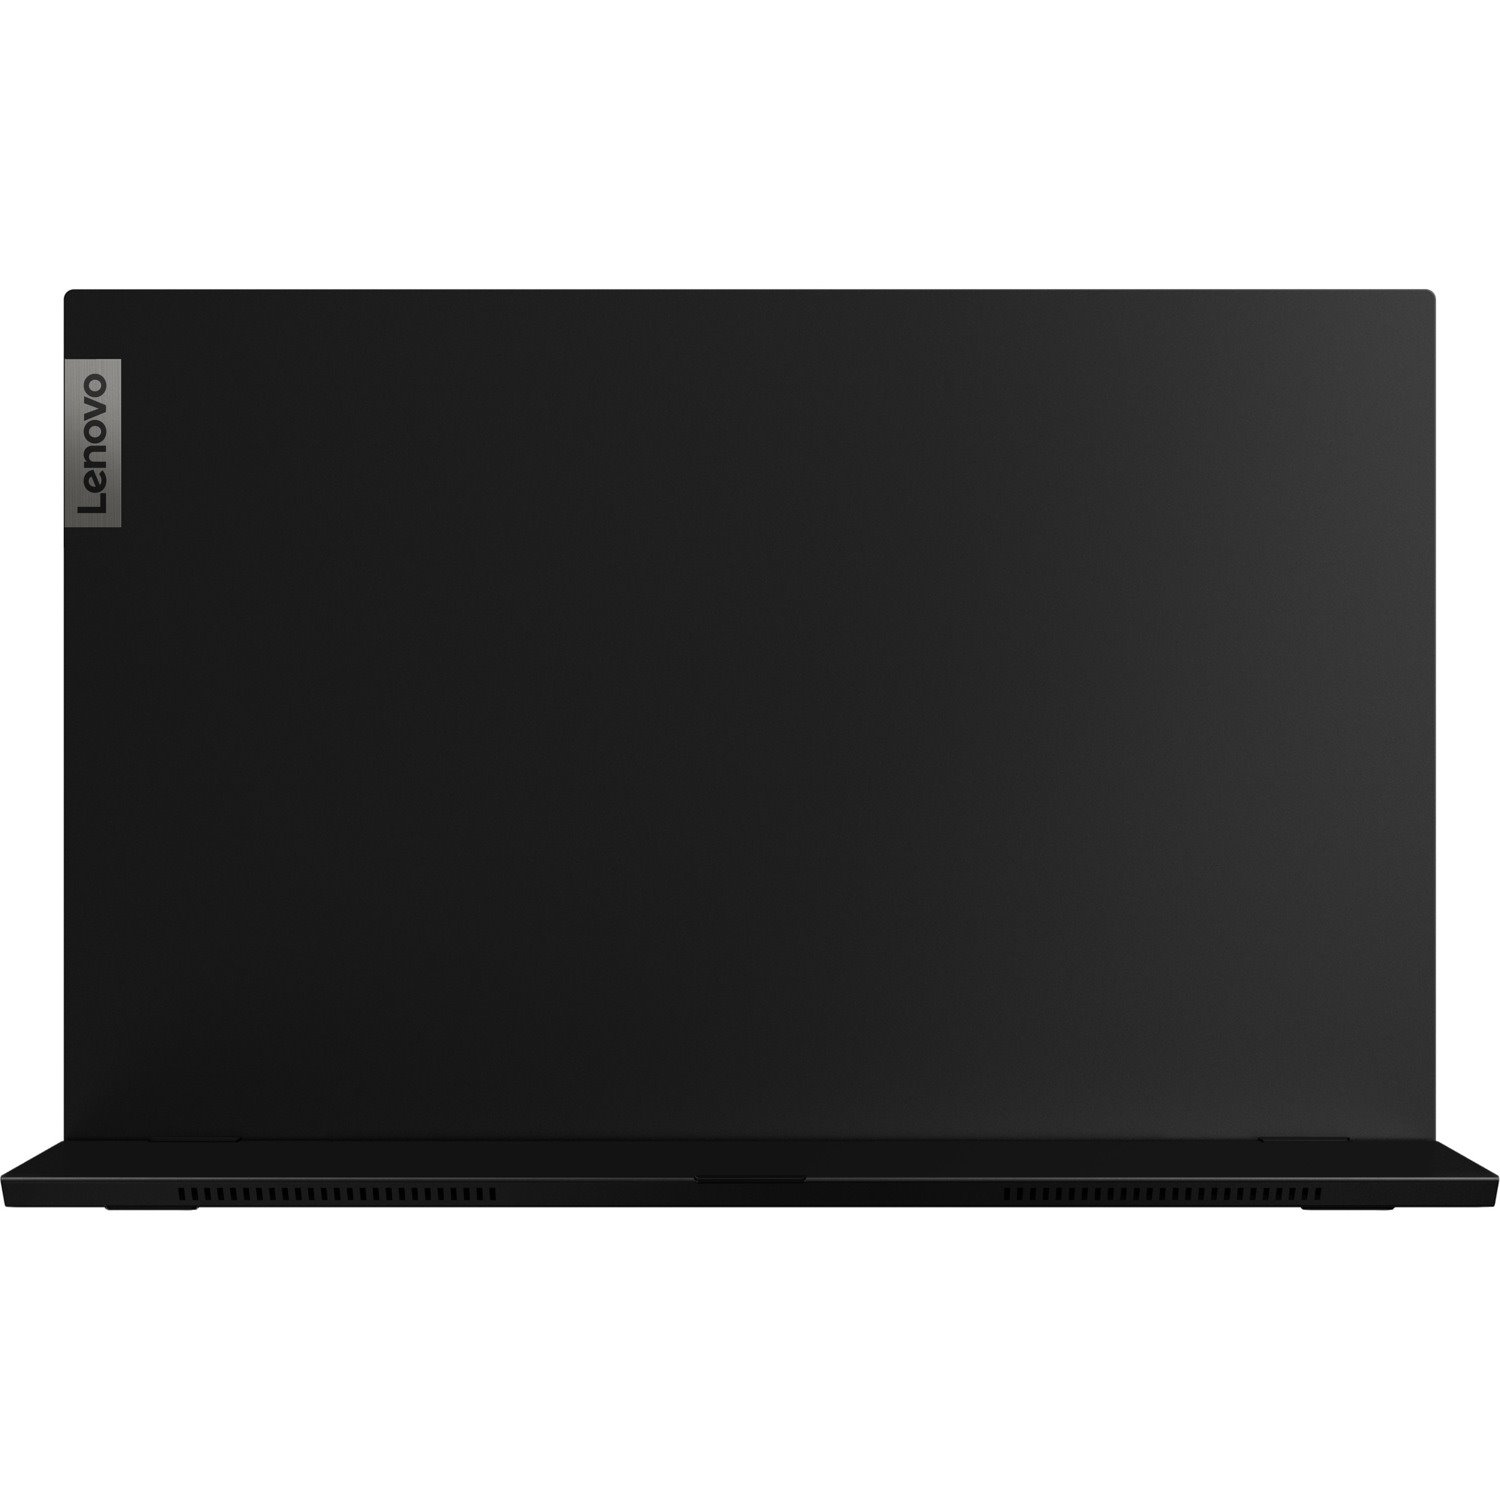 Lenovo ThinkVision M14 35.6 cm (14") Full HD LED LCD Monitor - 16:9 - Black